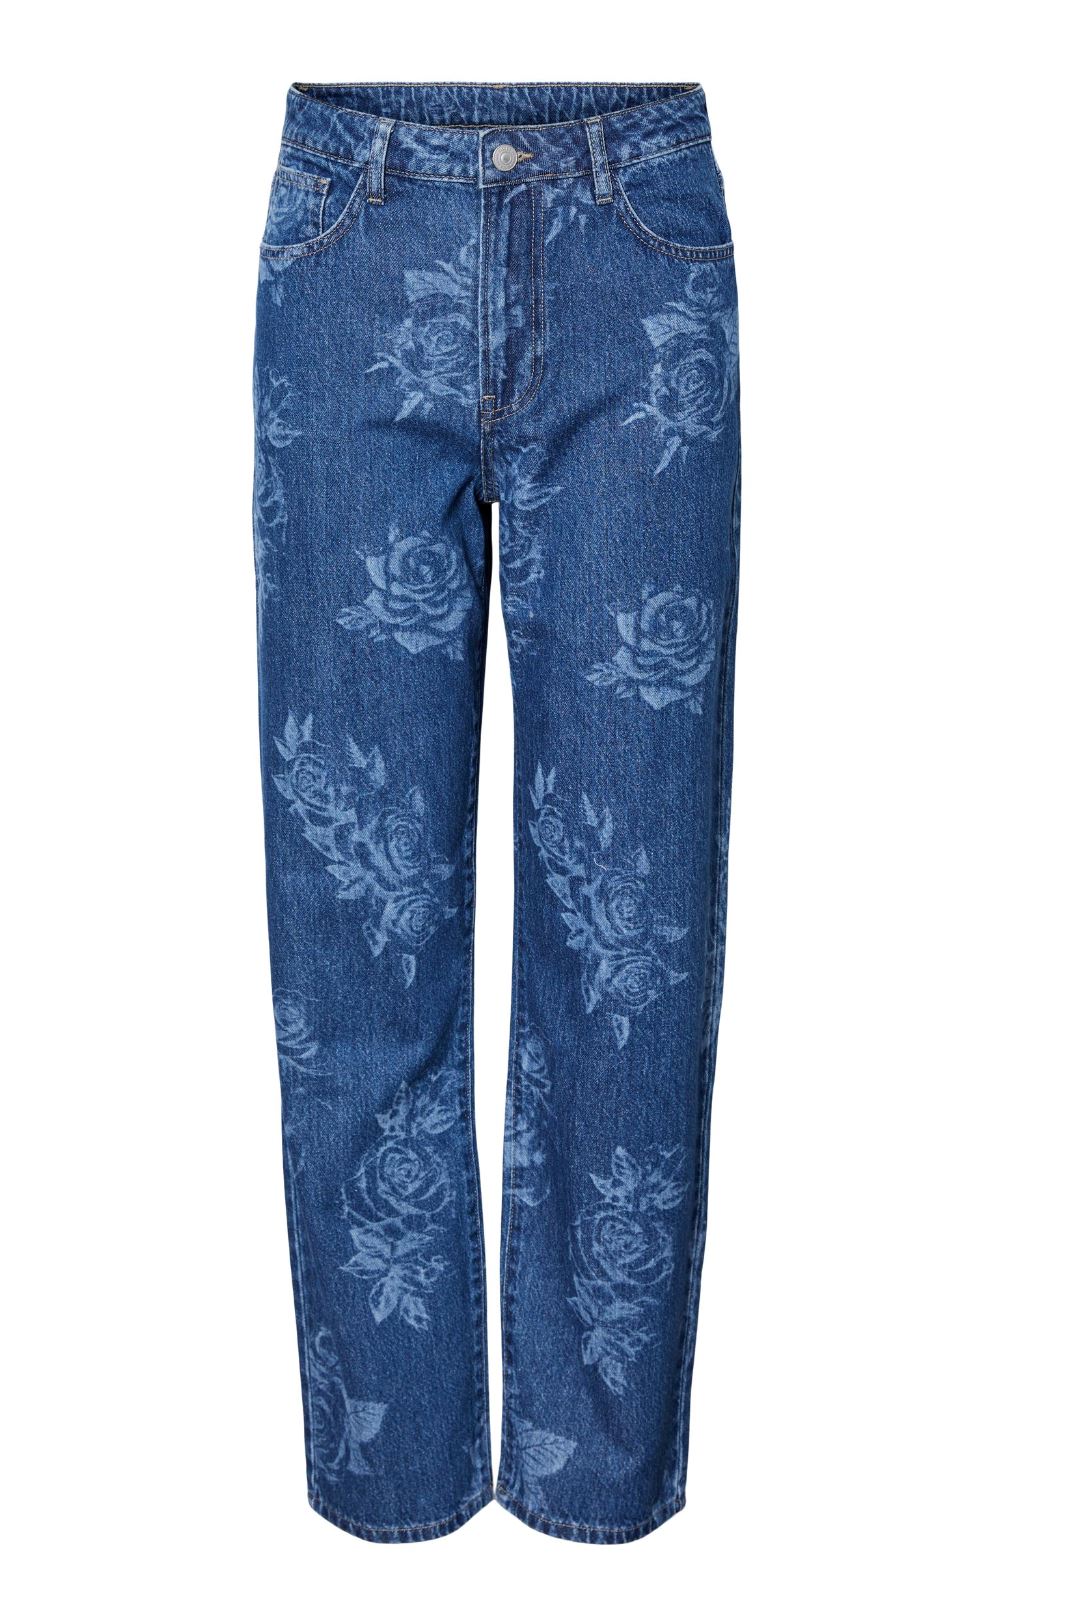 Pieces - Pcflora Denim Pants - 4527133 Dark Blue Denim Roses Bukser 